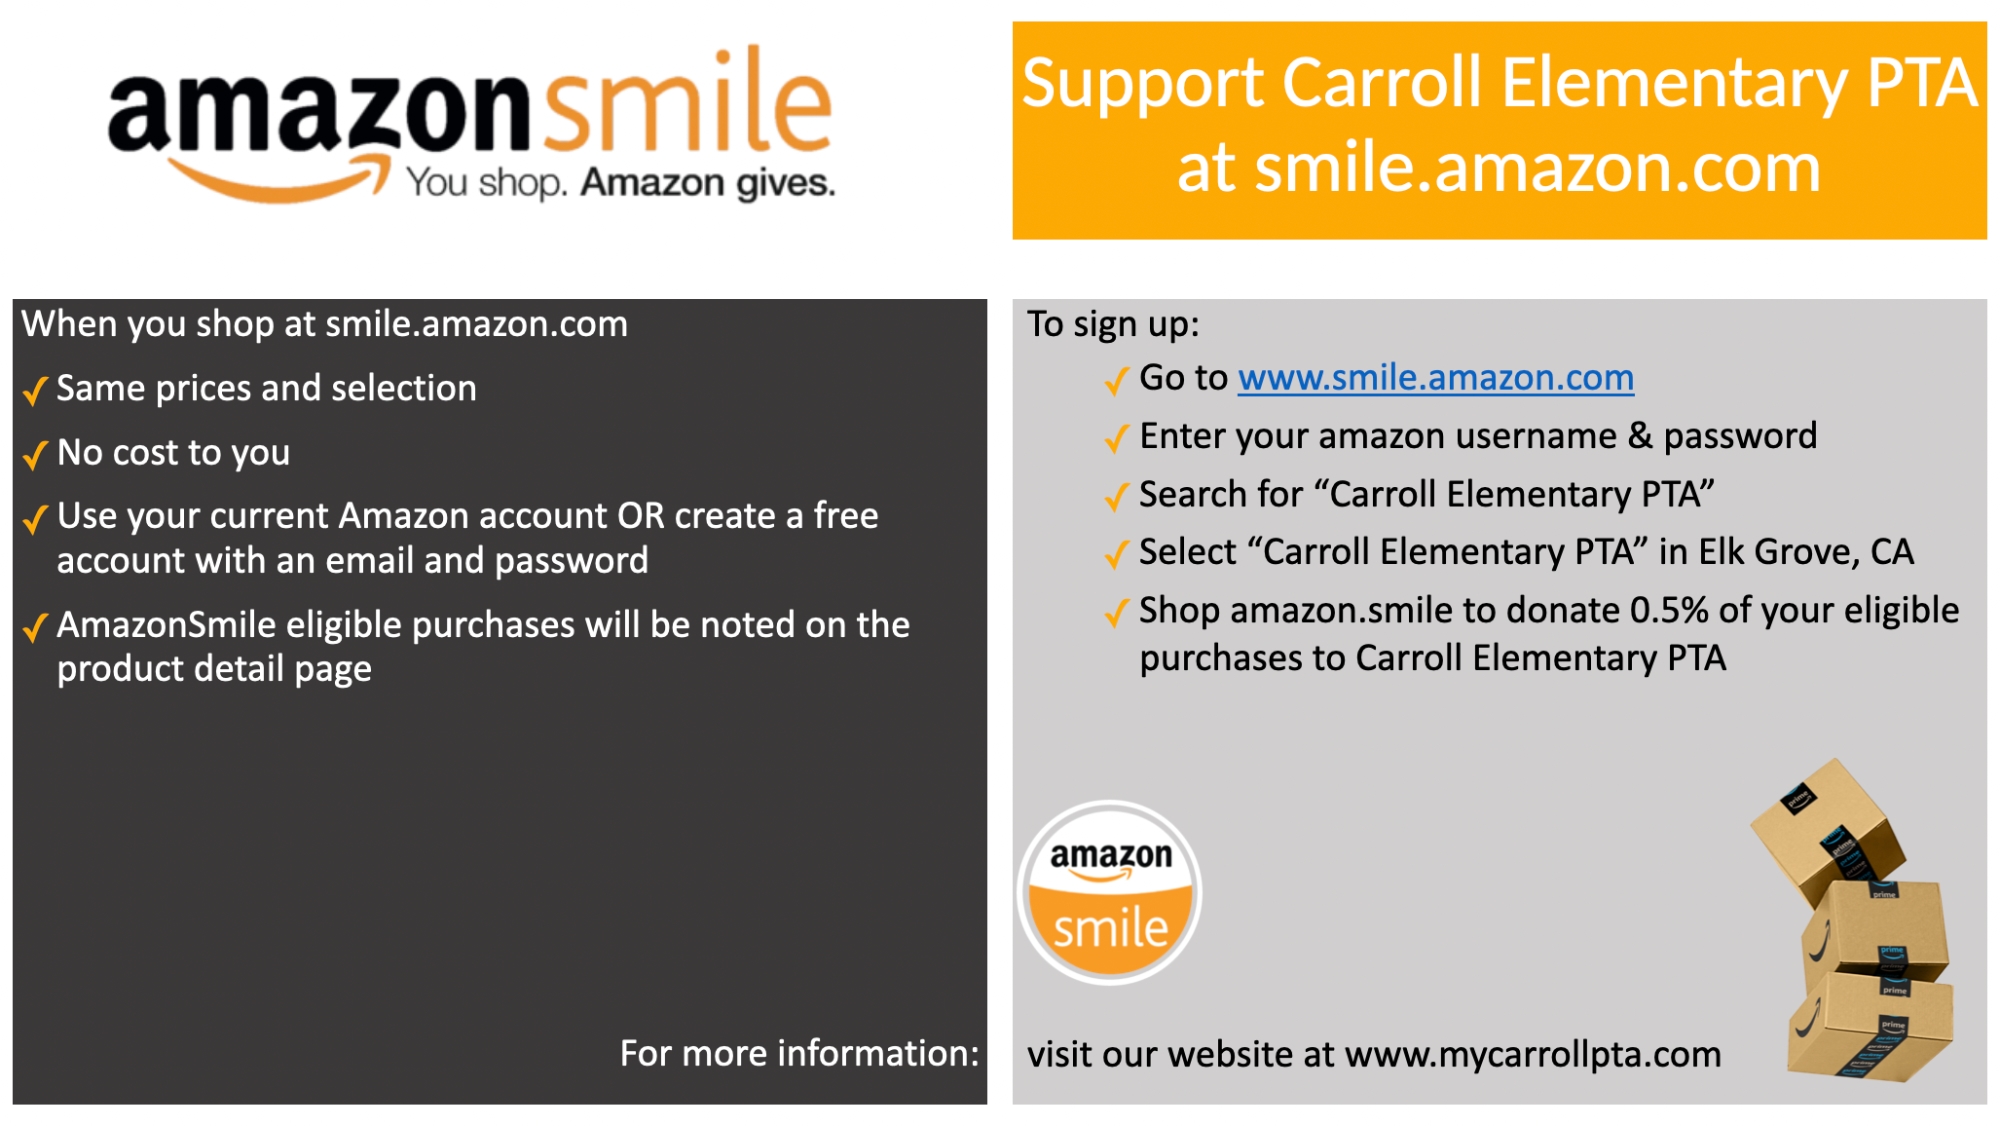 Amazon Smile Details